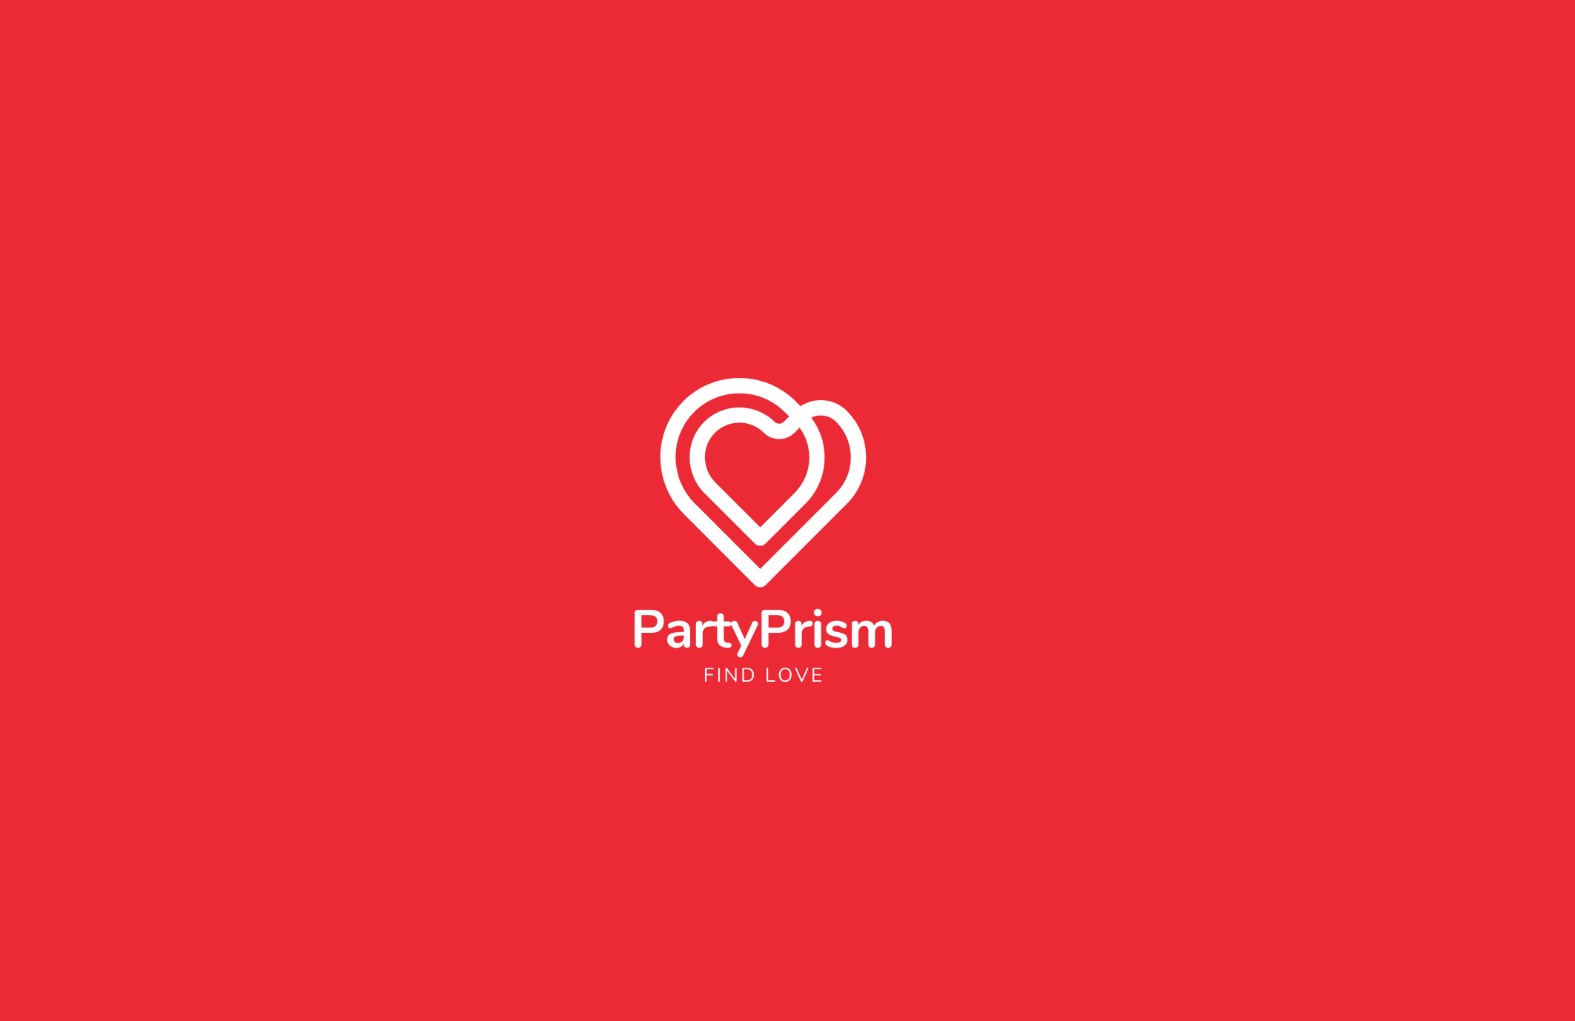 PartyPrism